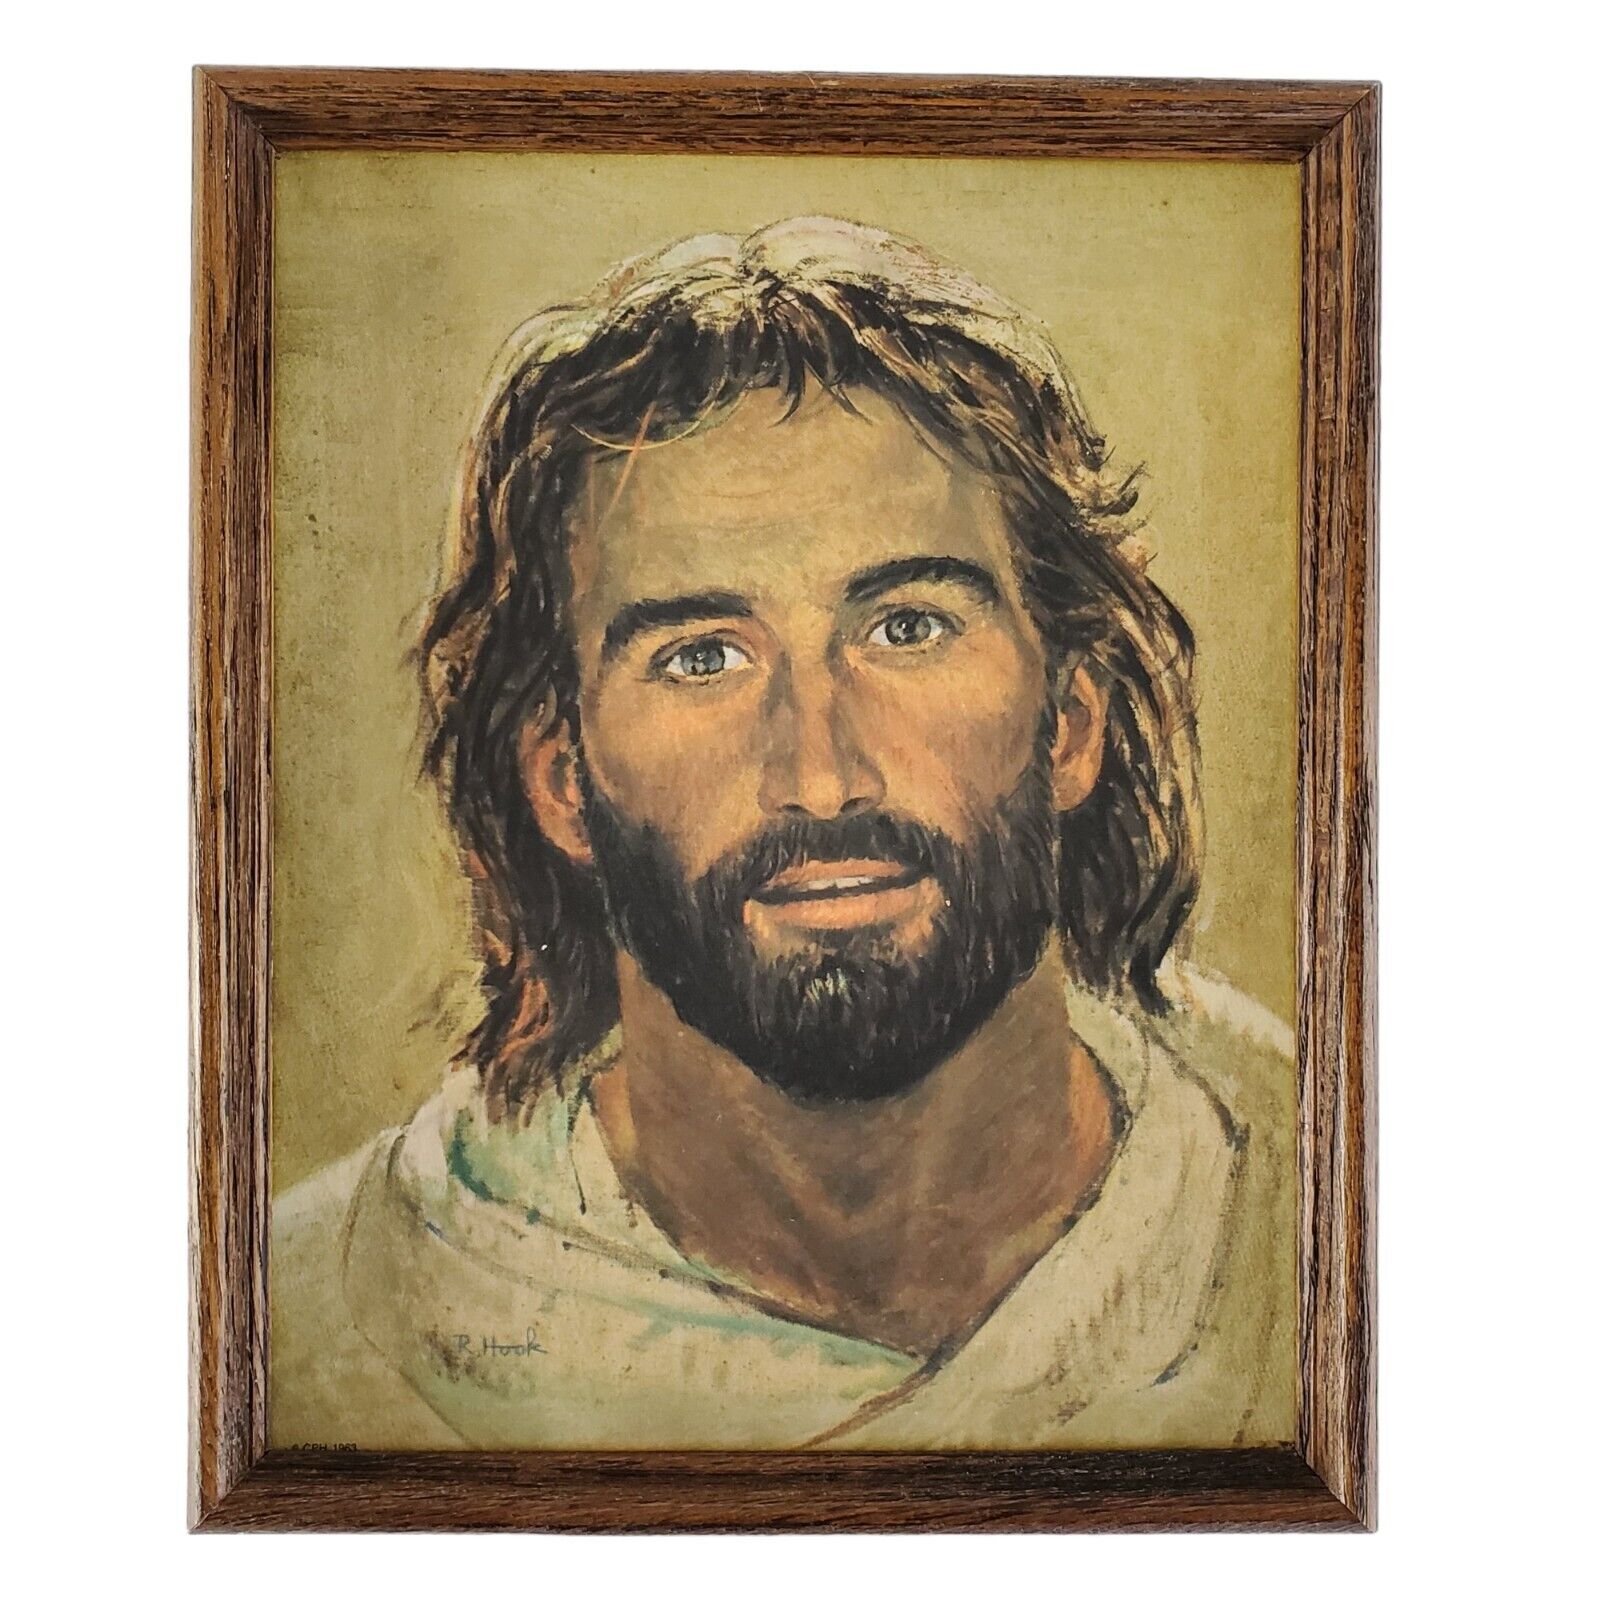 1963 R Hook Head of Jesus Christ Wood Framed Religious Art Signed Print Vintage